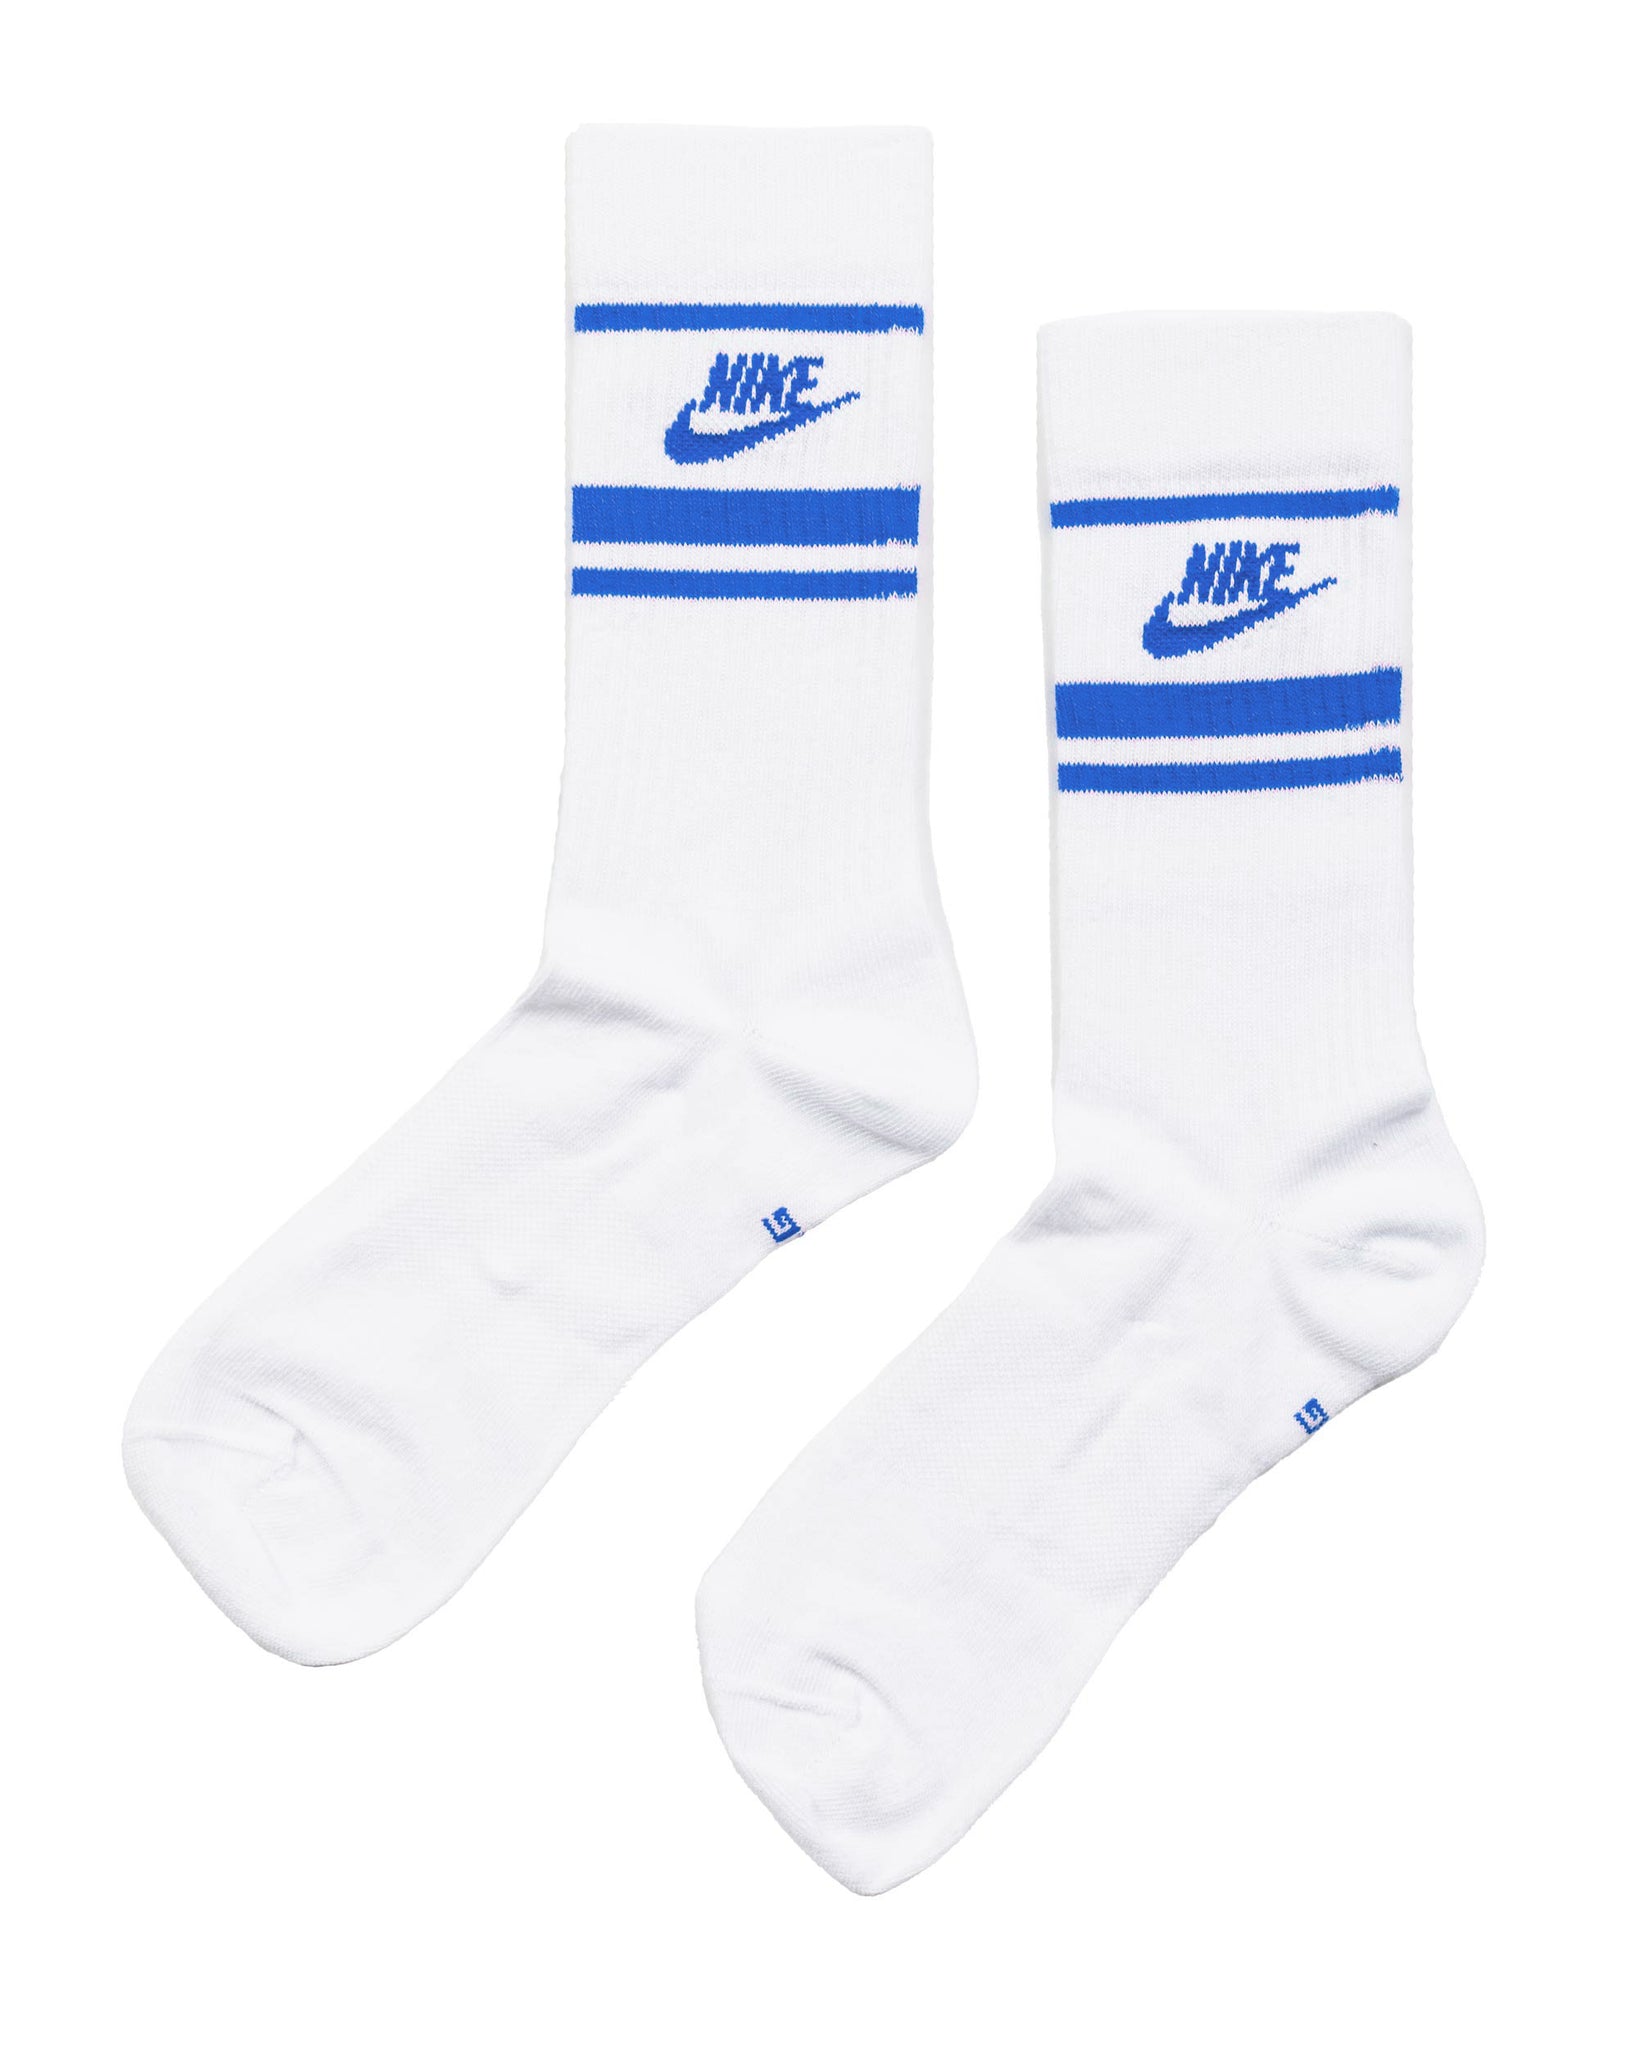 Nike Sportswear Everyday Essential Crew Socks WhiteGame Royal (3 Pack) Close